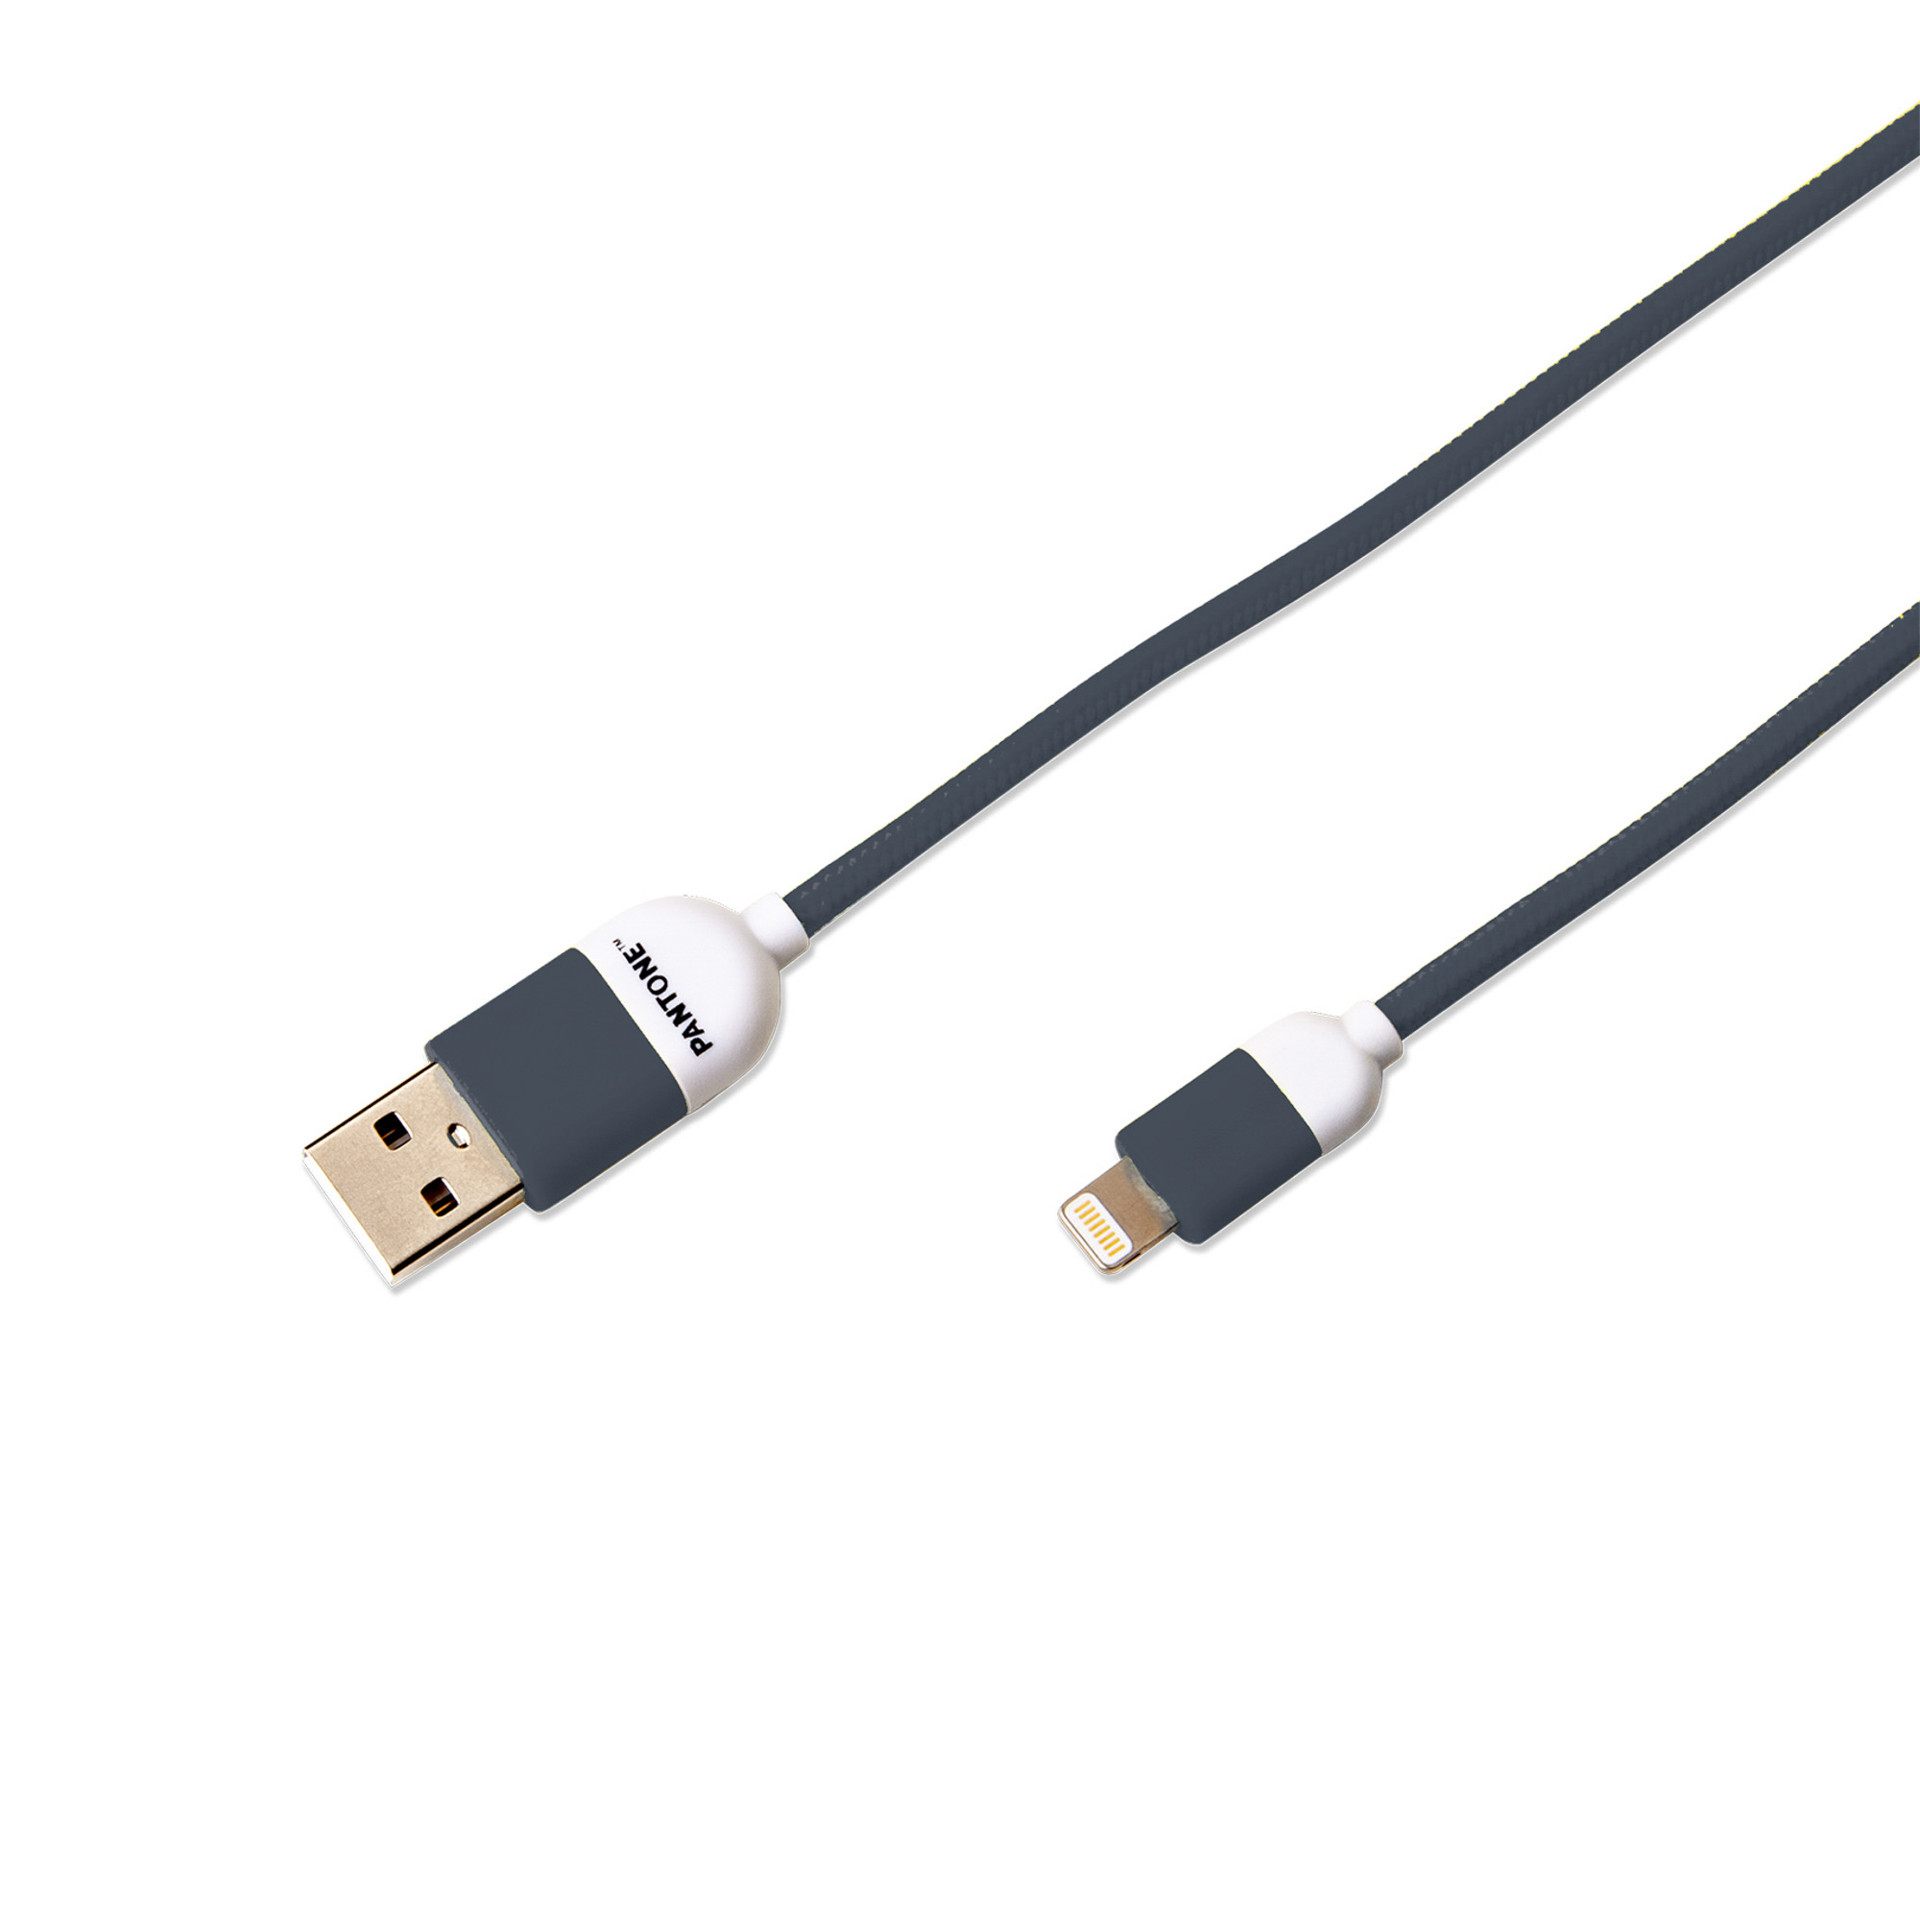 Cavo dati USB Lightning linea Pantone, , large